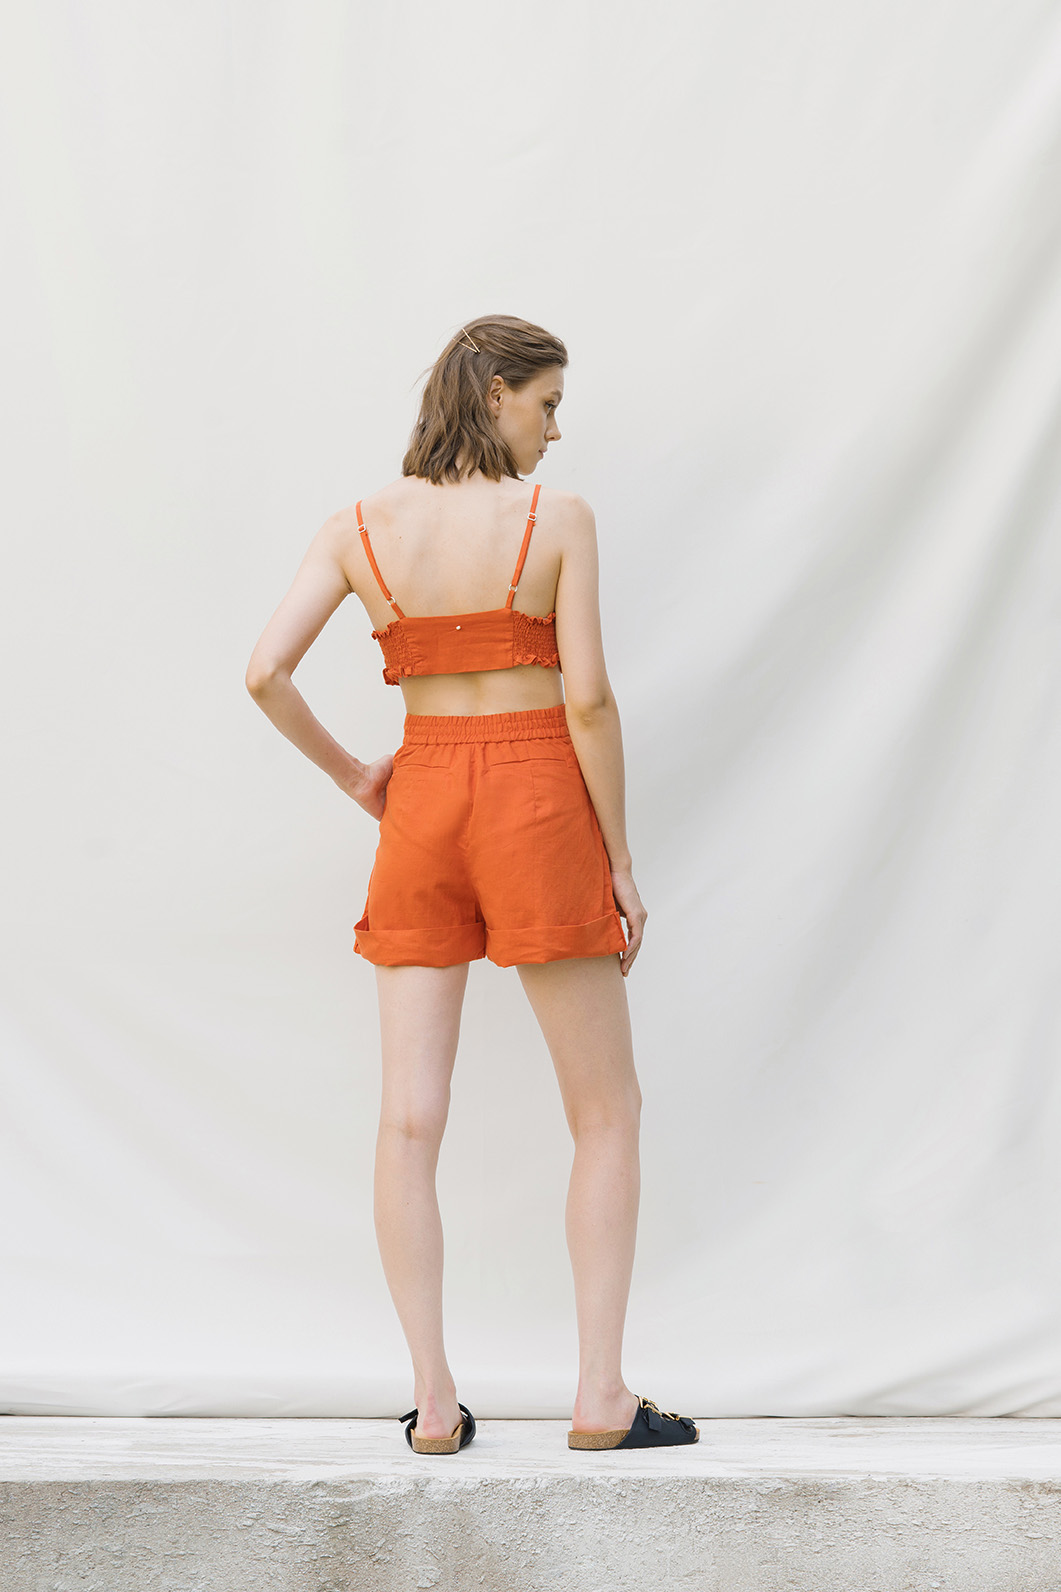 Rolli orange color
shorts